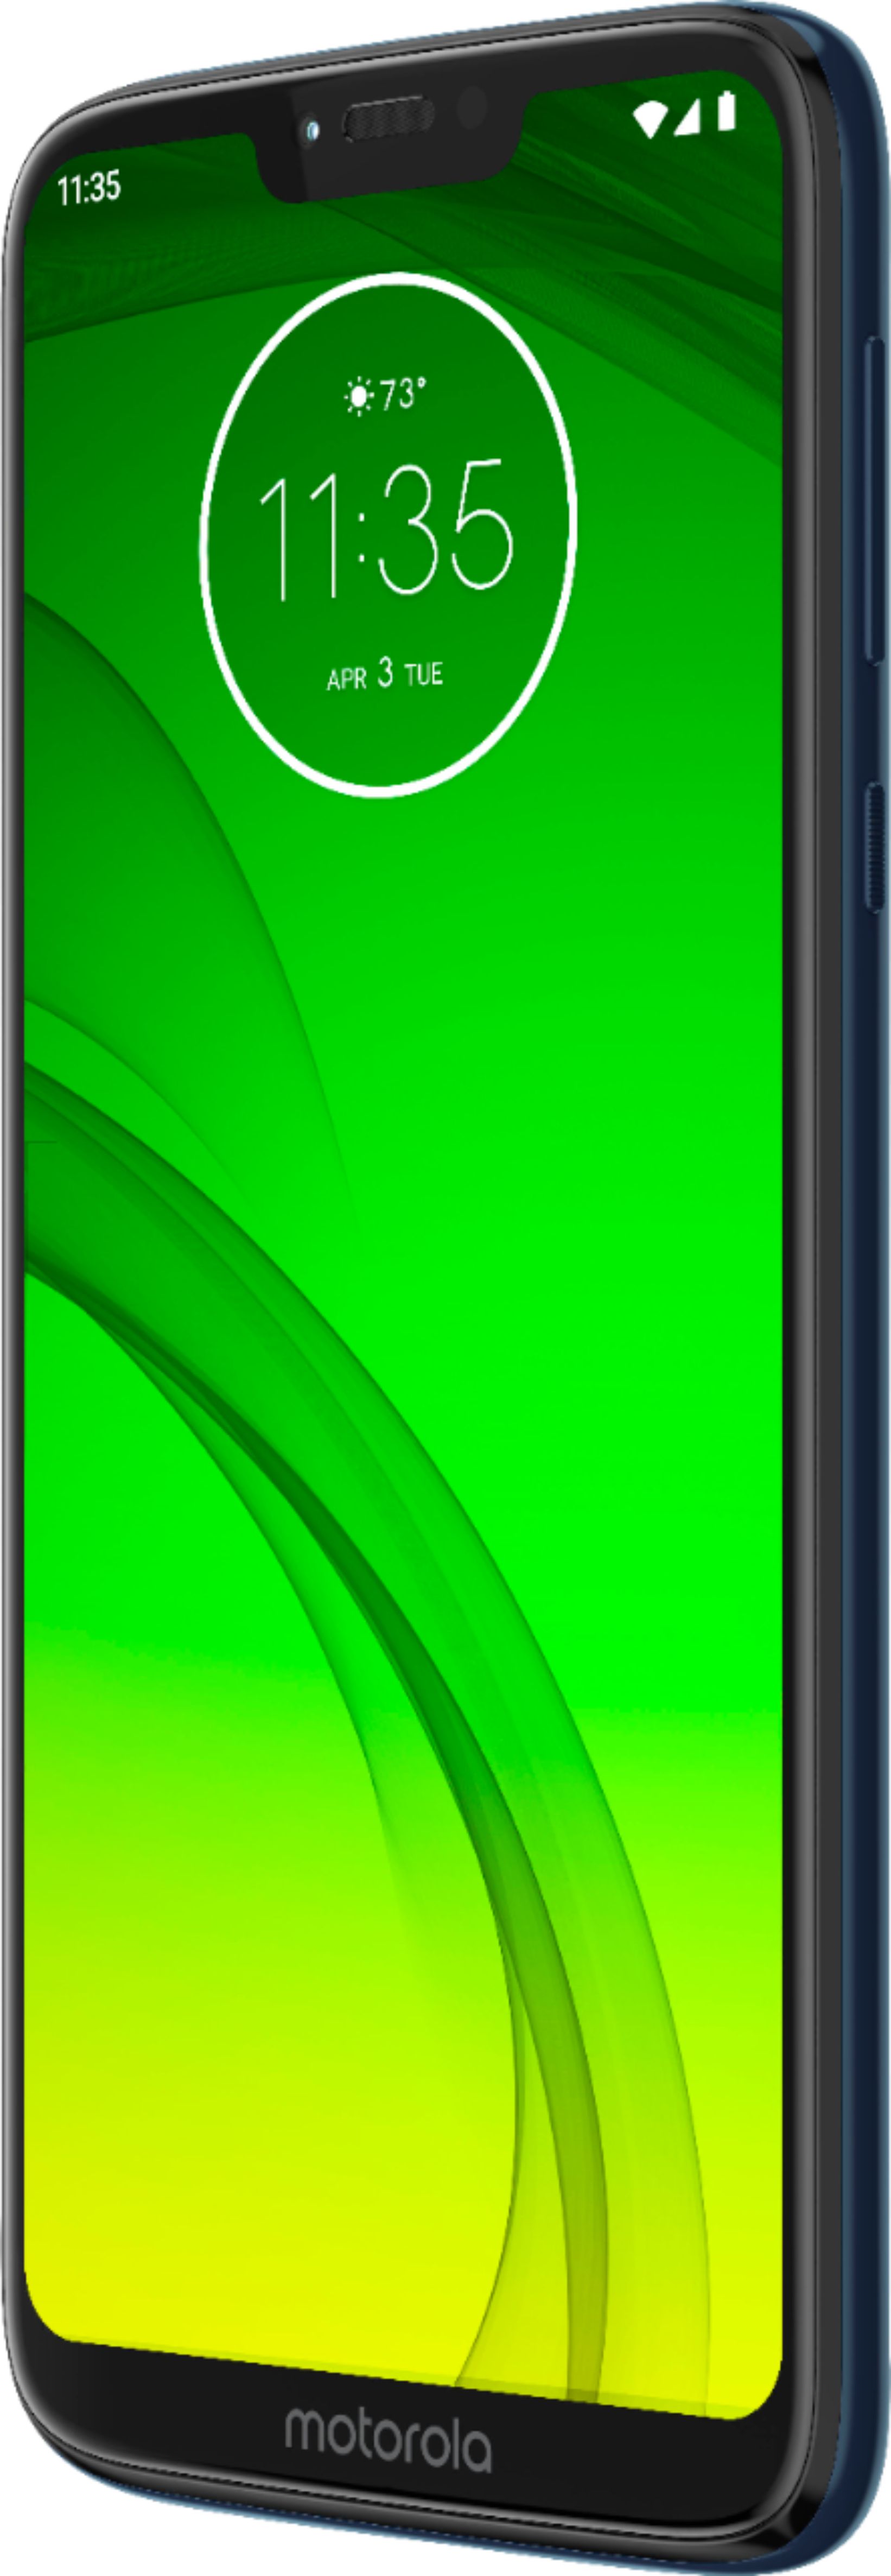 Left View: Motorola - Moto G7 Power with 32GB Memory Cell Phone (Unlocked) - Marine Blue